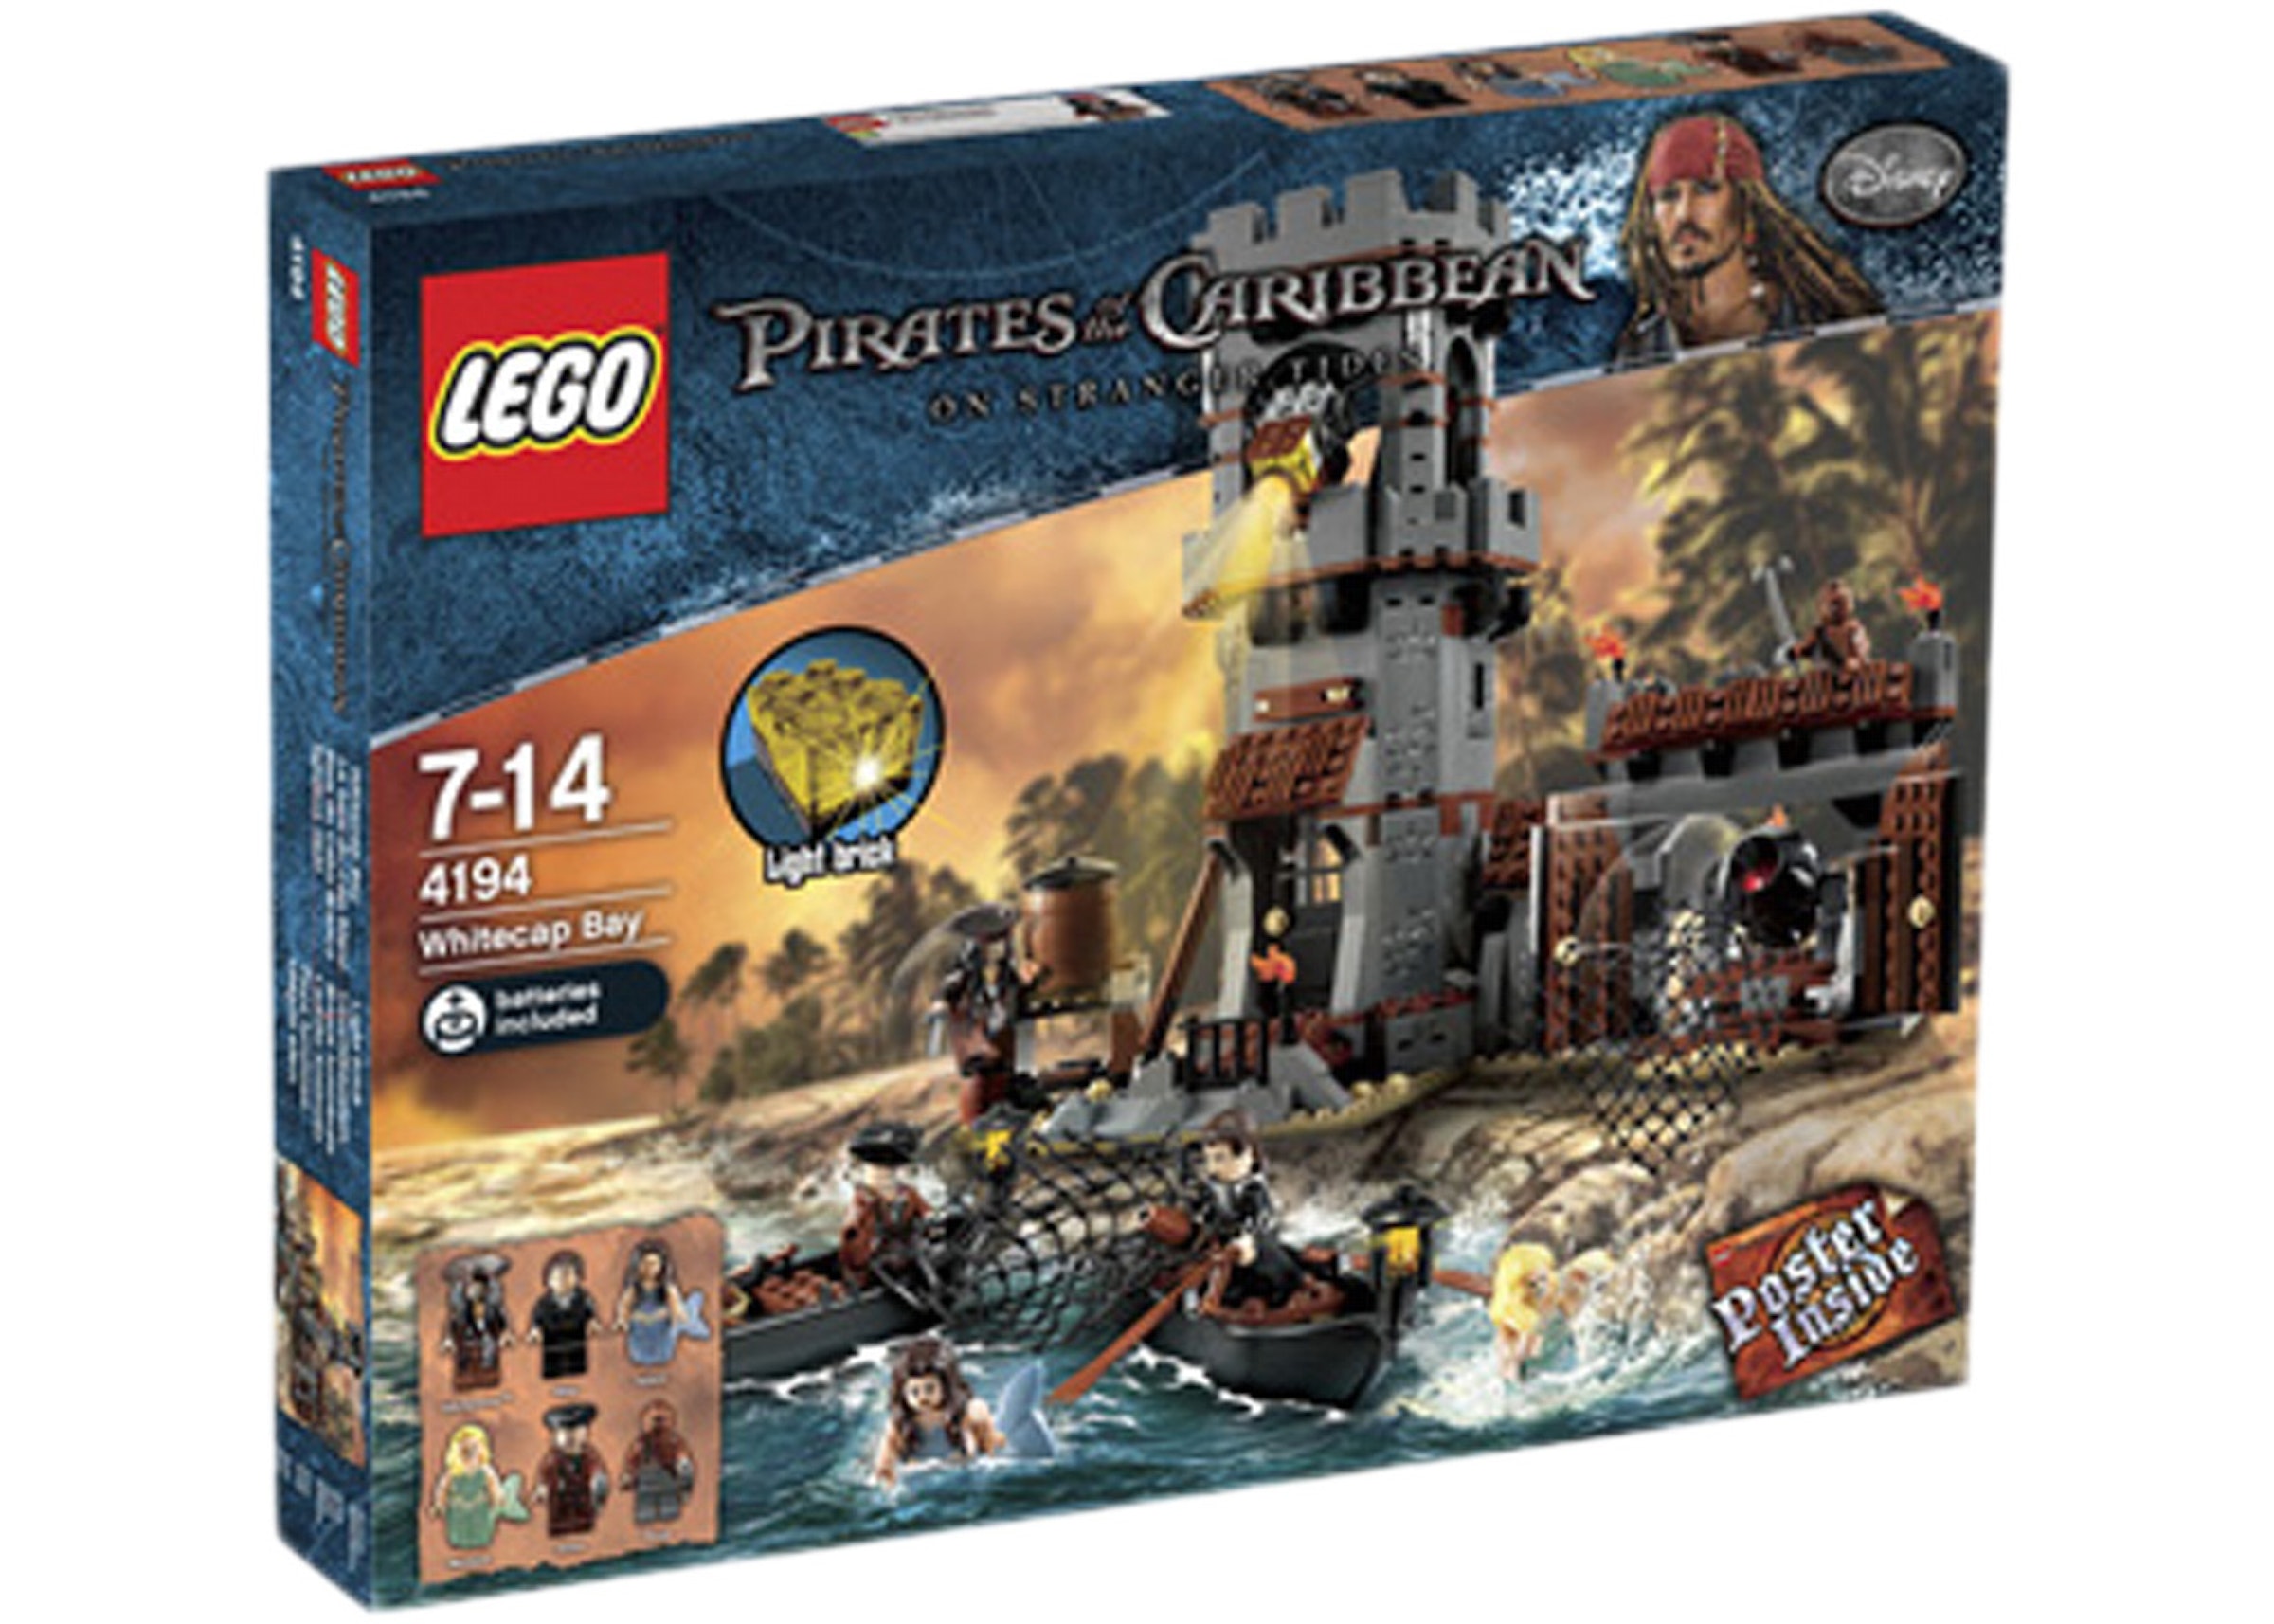 Shipwreck atlet hule LEGO Pirates of the Caribbean Whitecap Bay Set 4194 - US